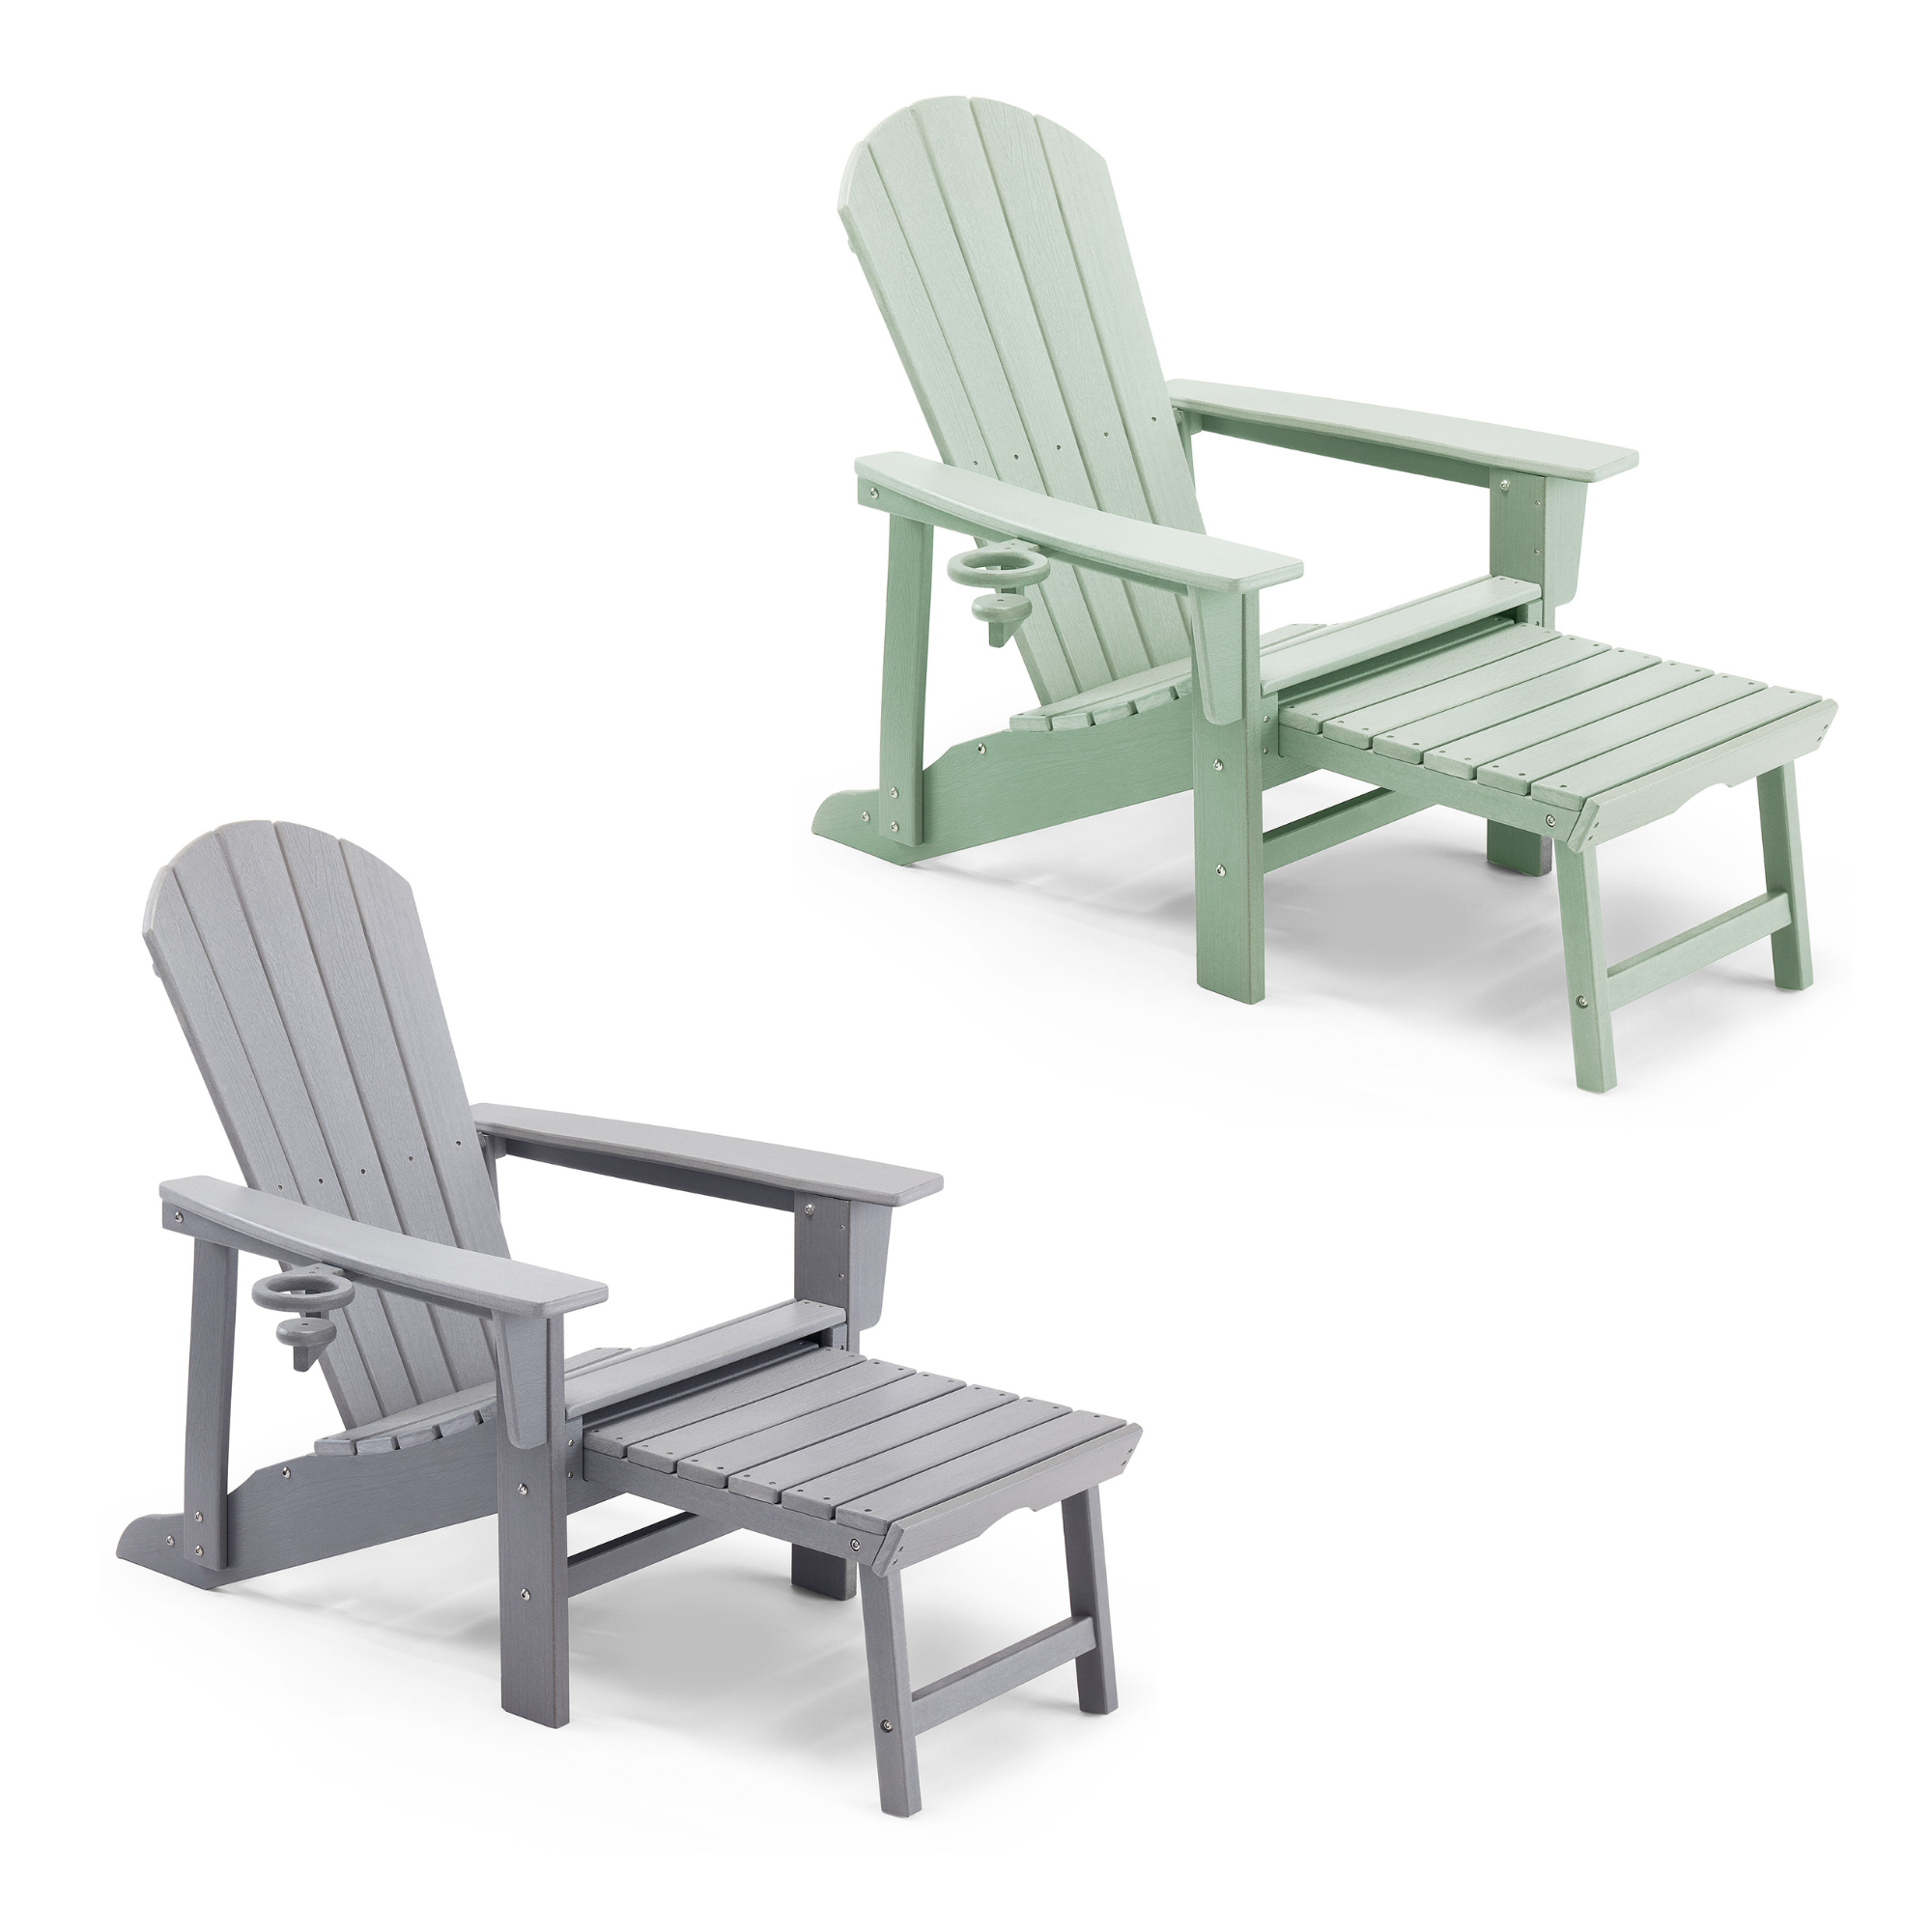 Adirondack Chairs with Footstool, Water Resistant Garden Chairs, VonHaus